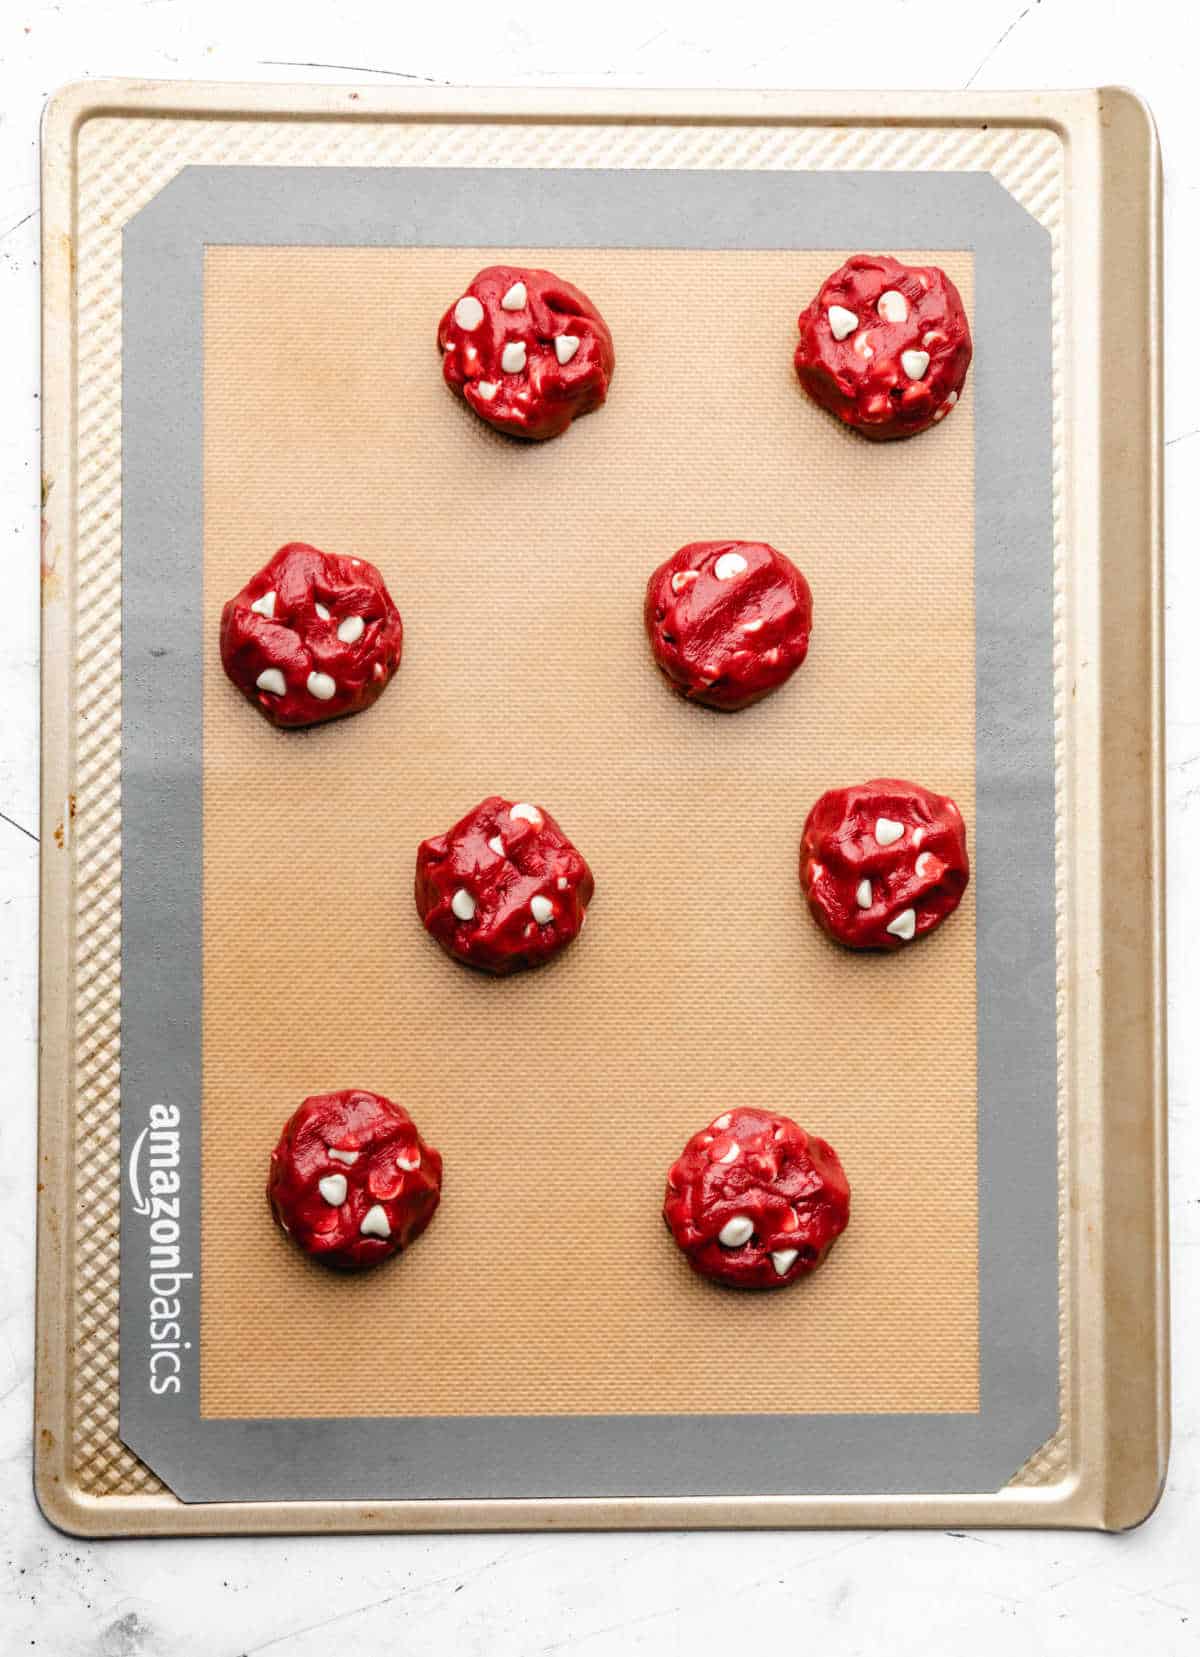 Red velvet cookie dough on a baking sheet. 